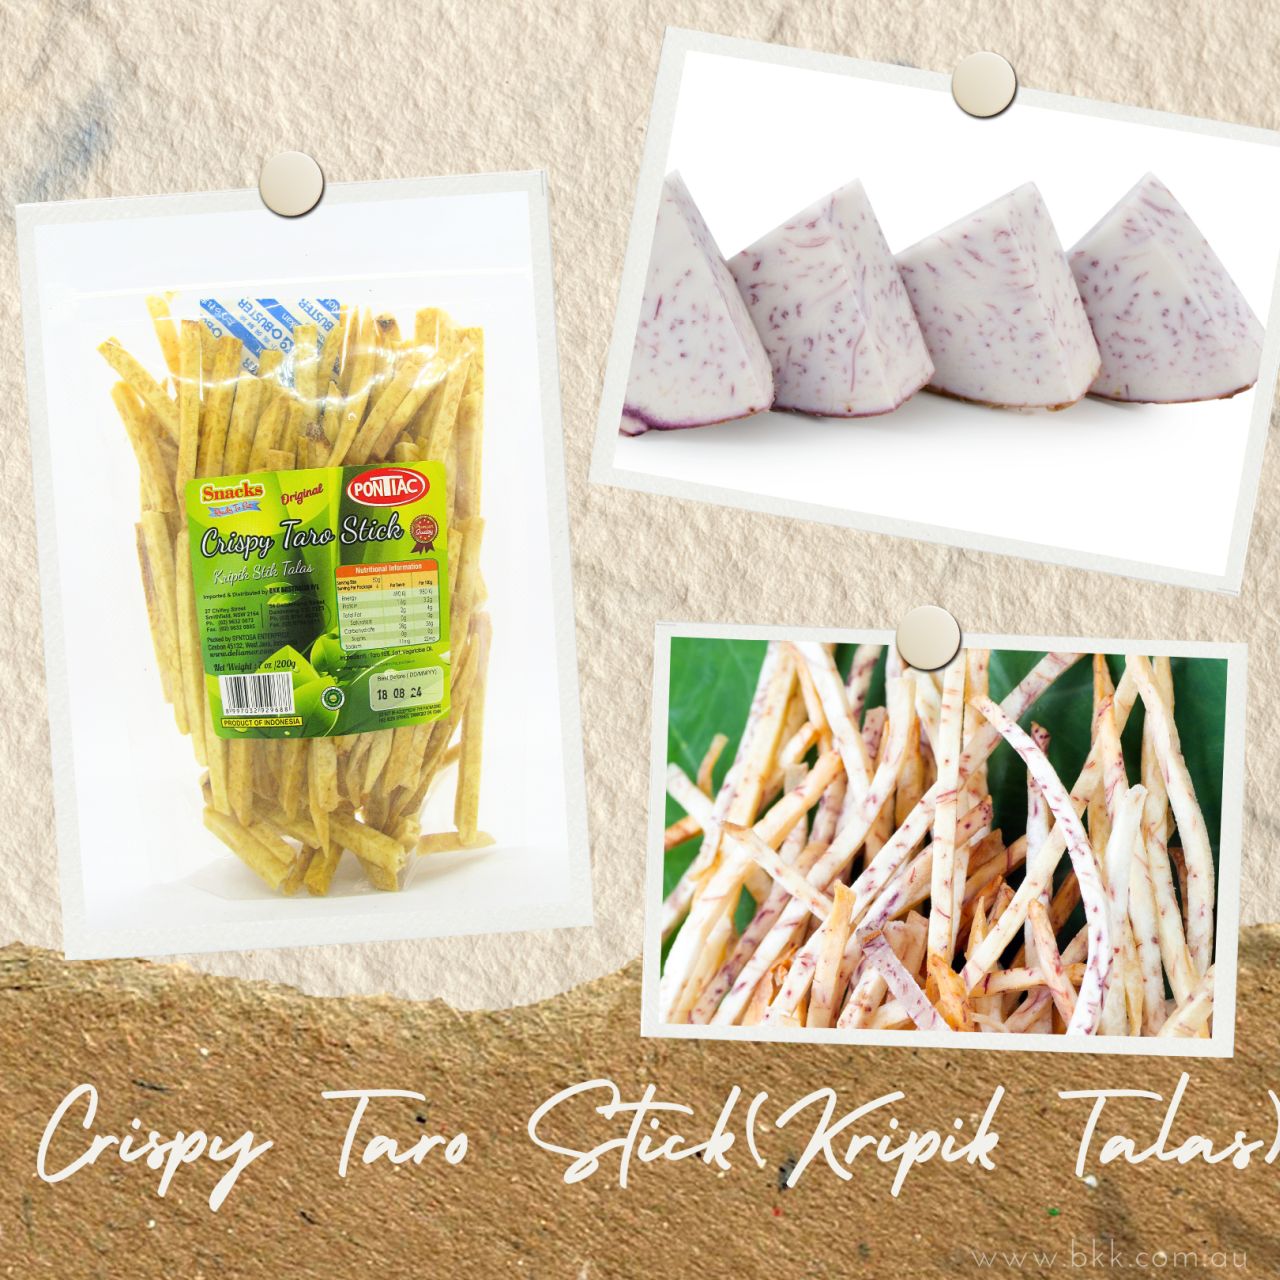 image presents Crispy Taro Stick Kripik Talas